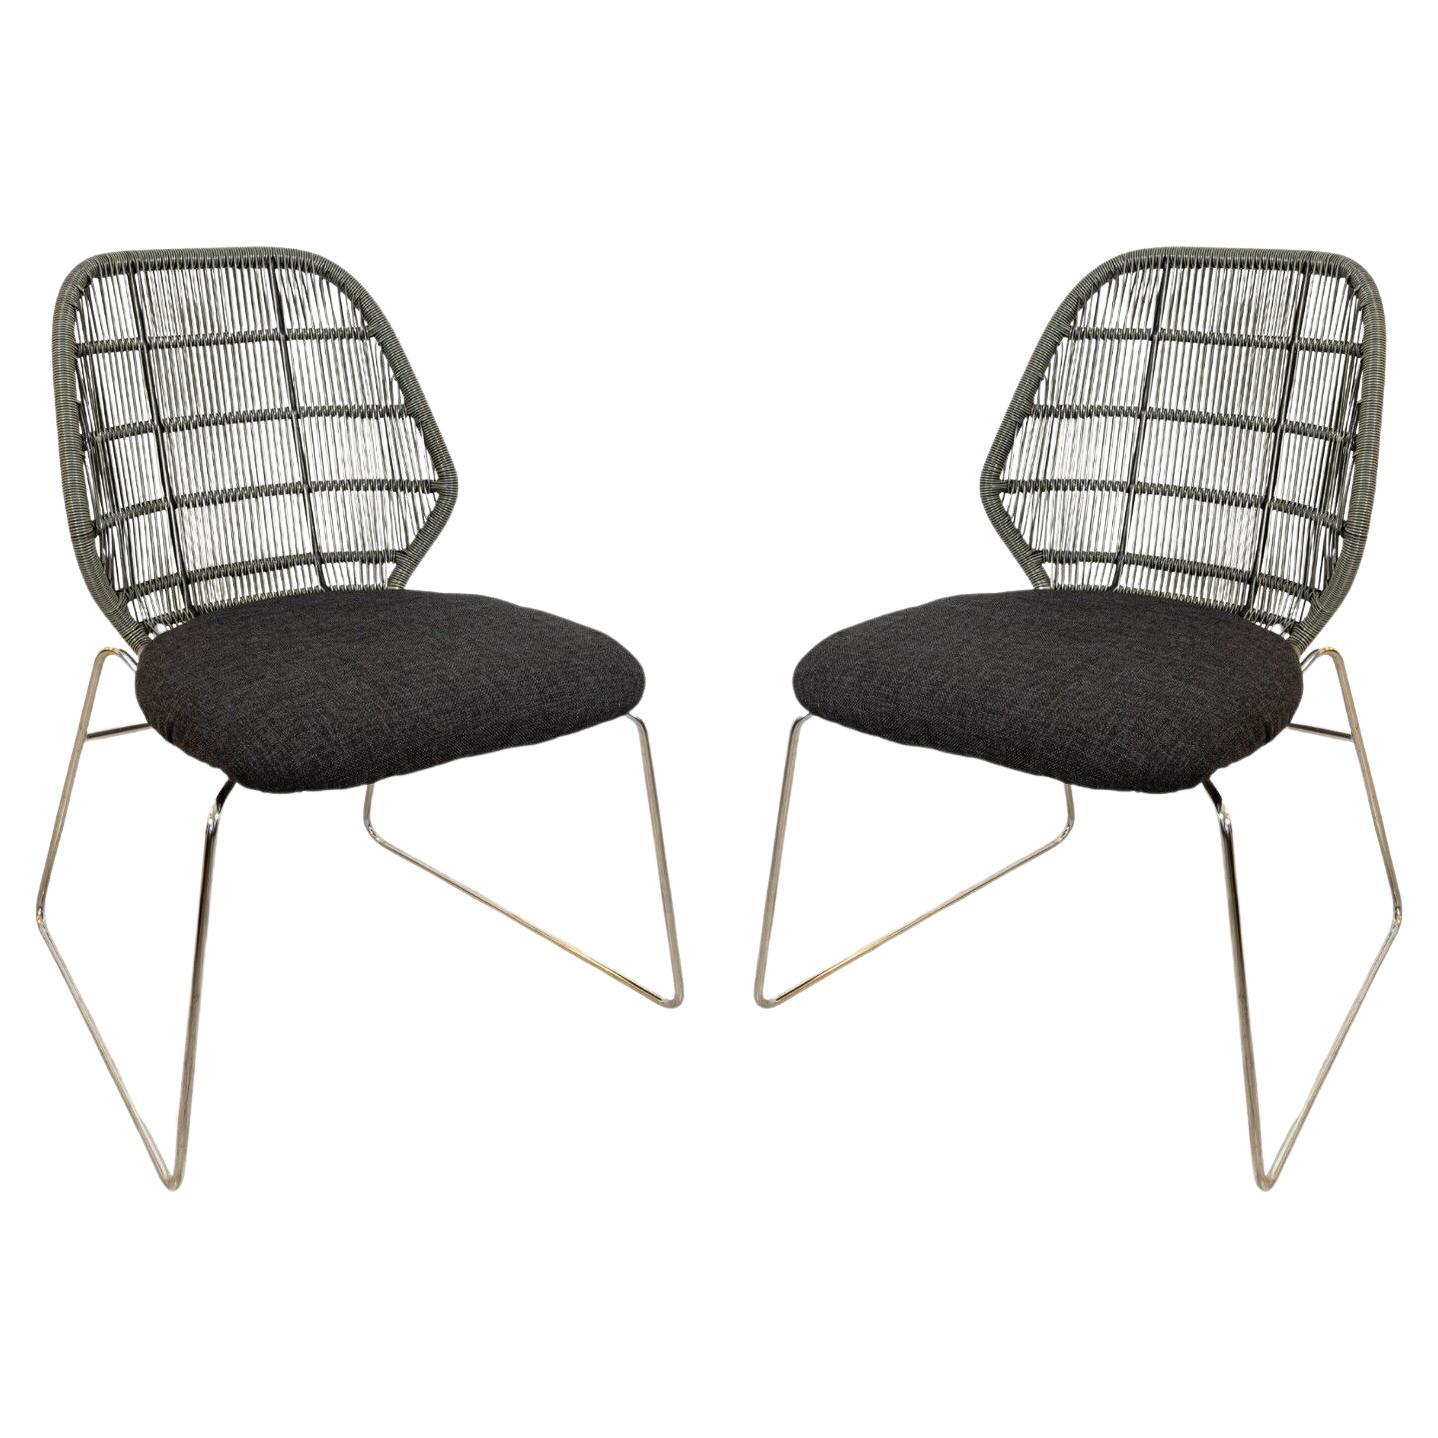 Paire de chaises contemporaines en acier inoxydable et en crinoline de B&B Italia. en vente